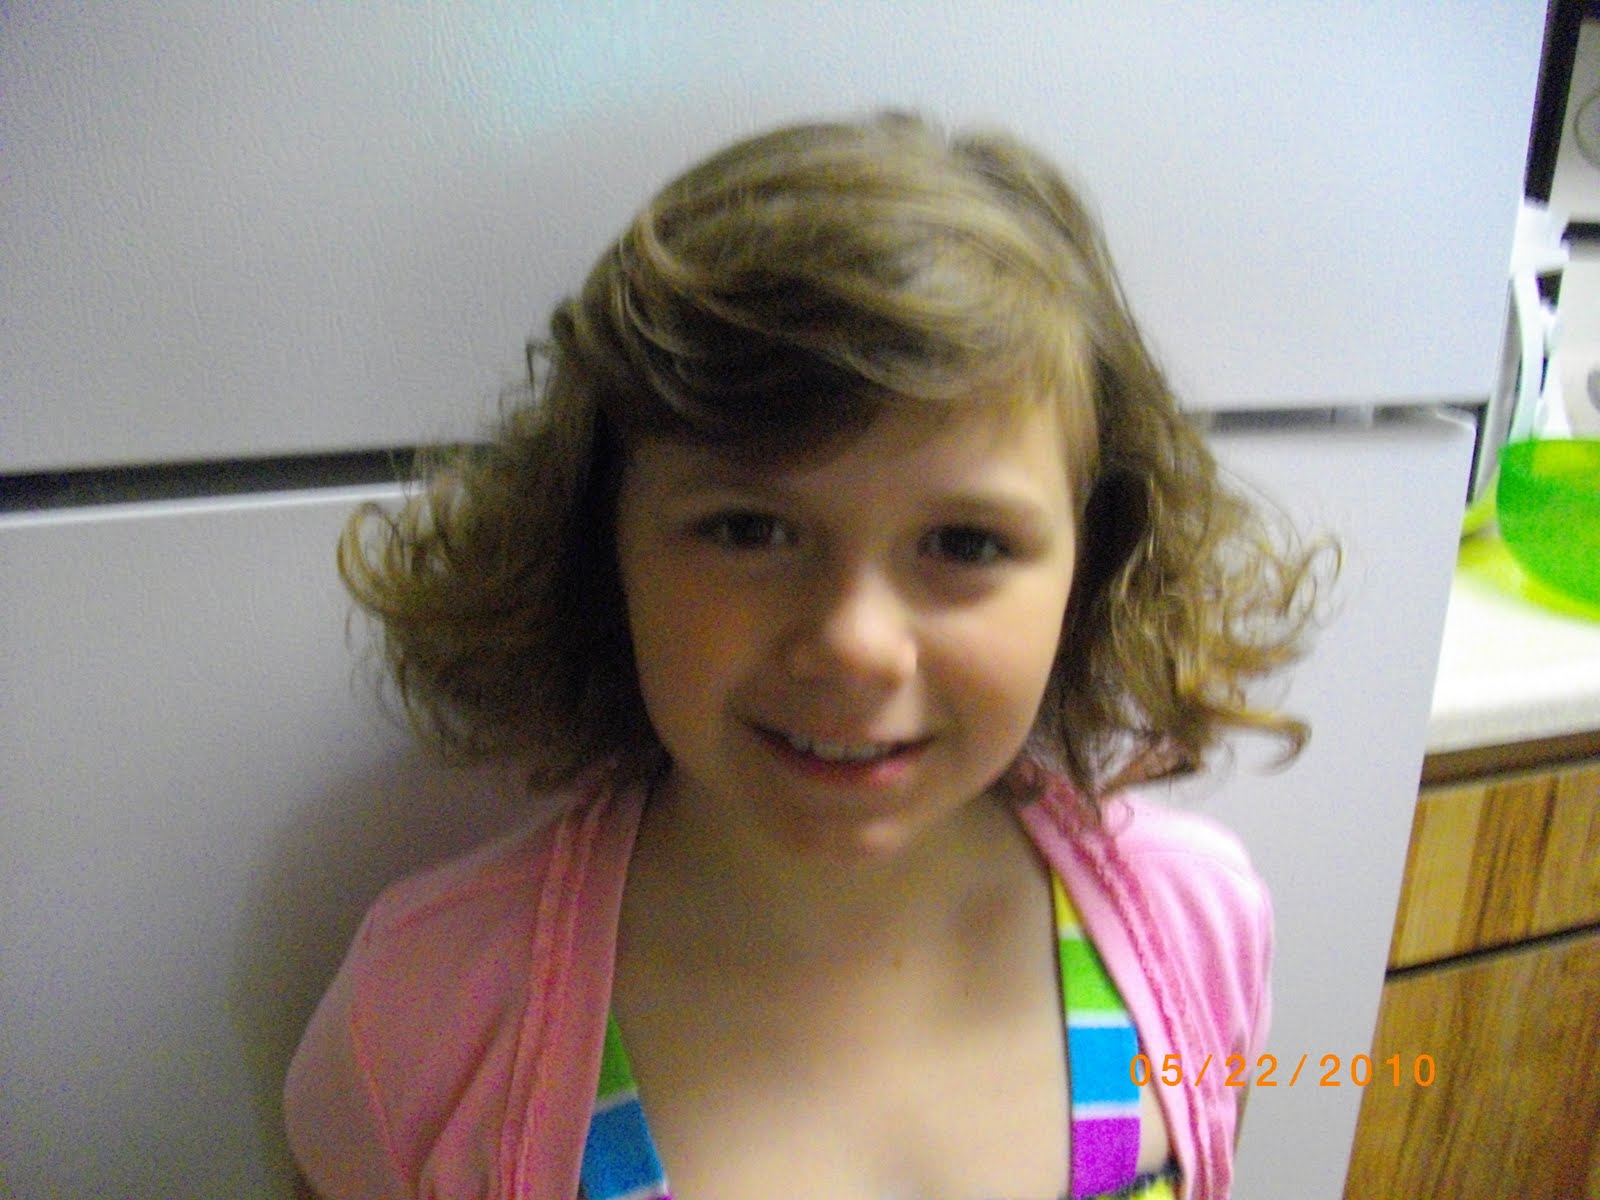 Shear Sensations: The Proper Haircut for Little Girls